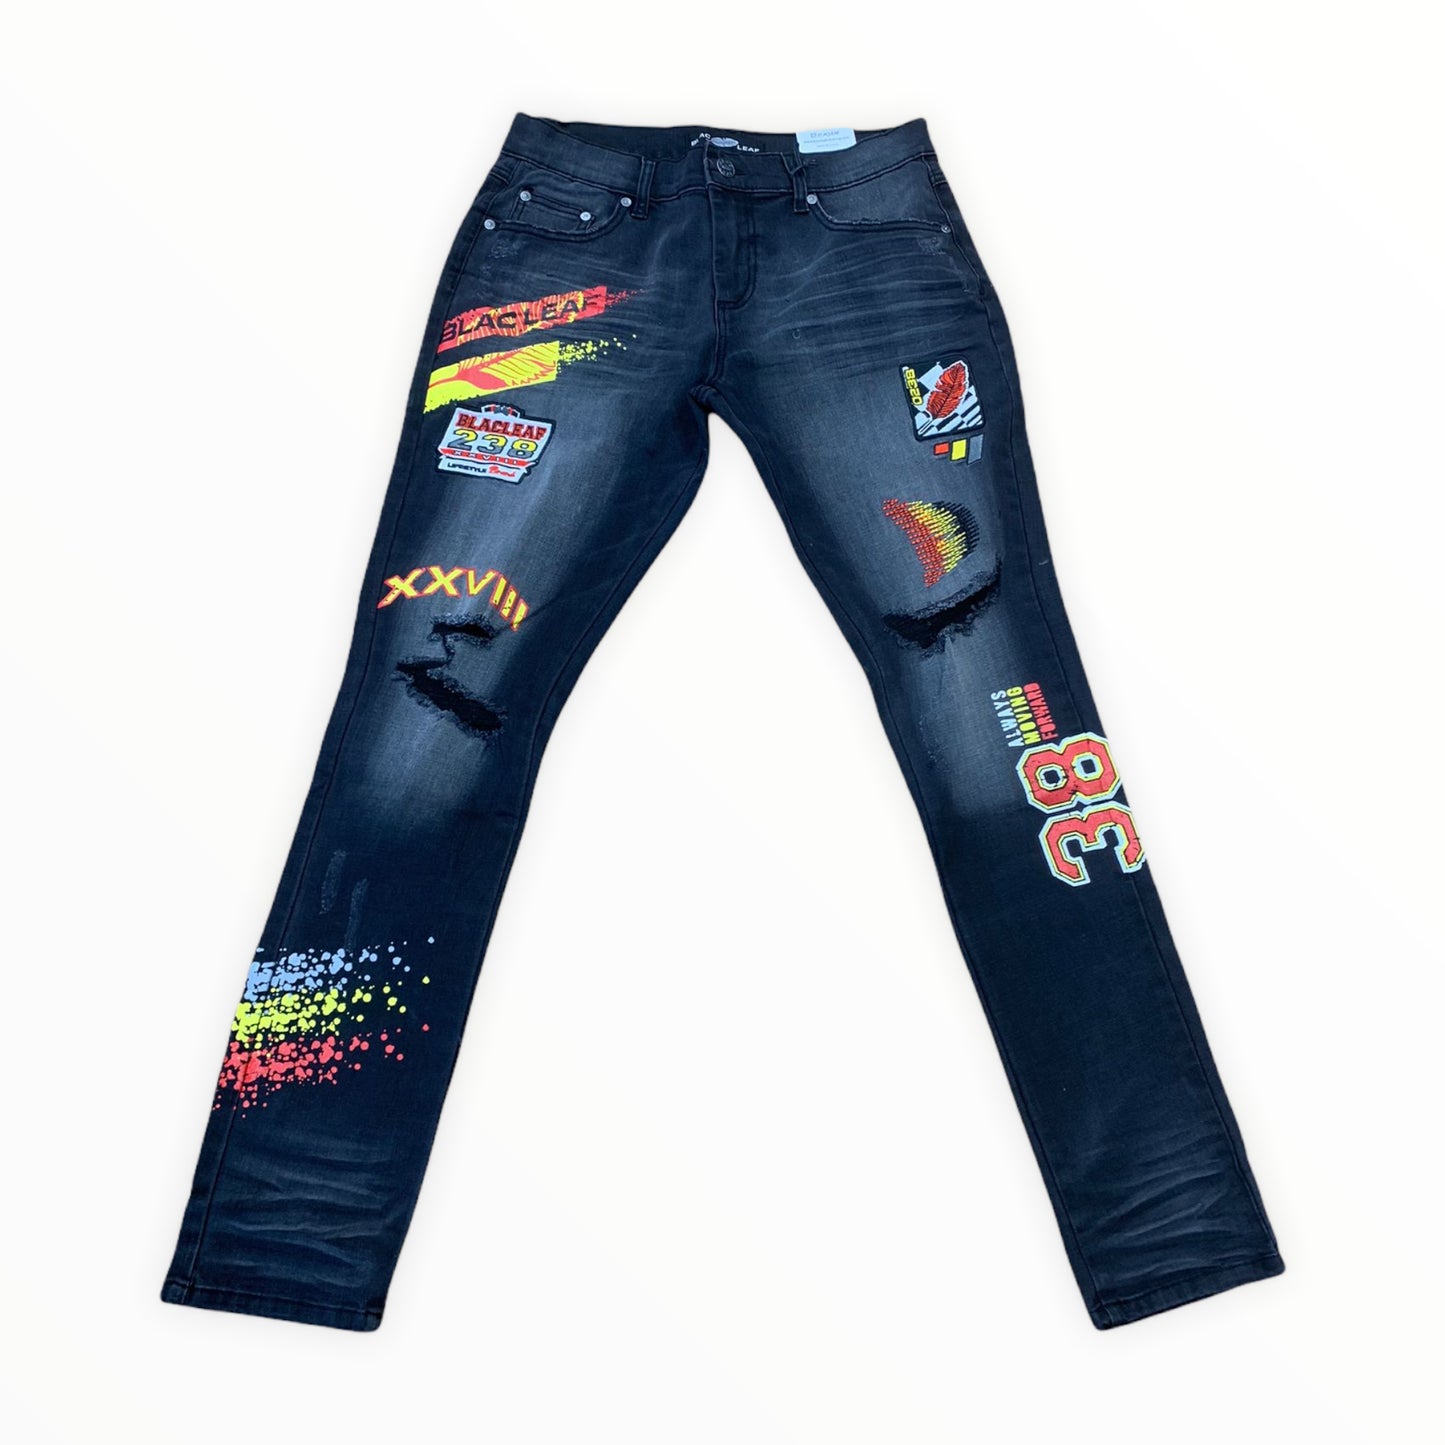 BLAC LEAF: Finish Strong Denim Jeans BLAMF-108